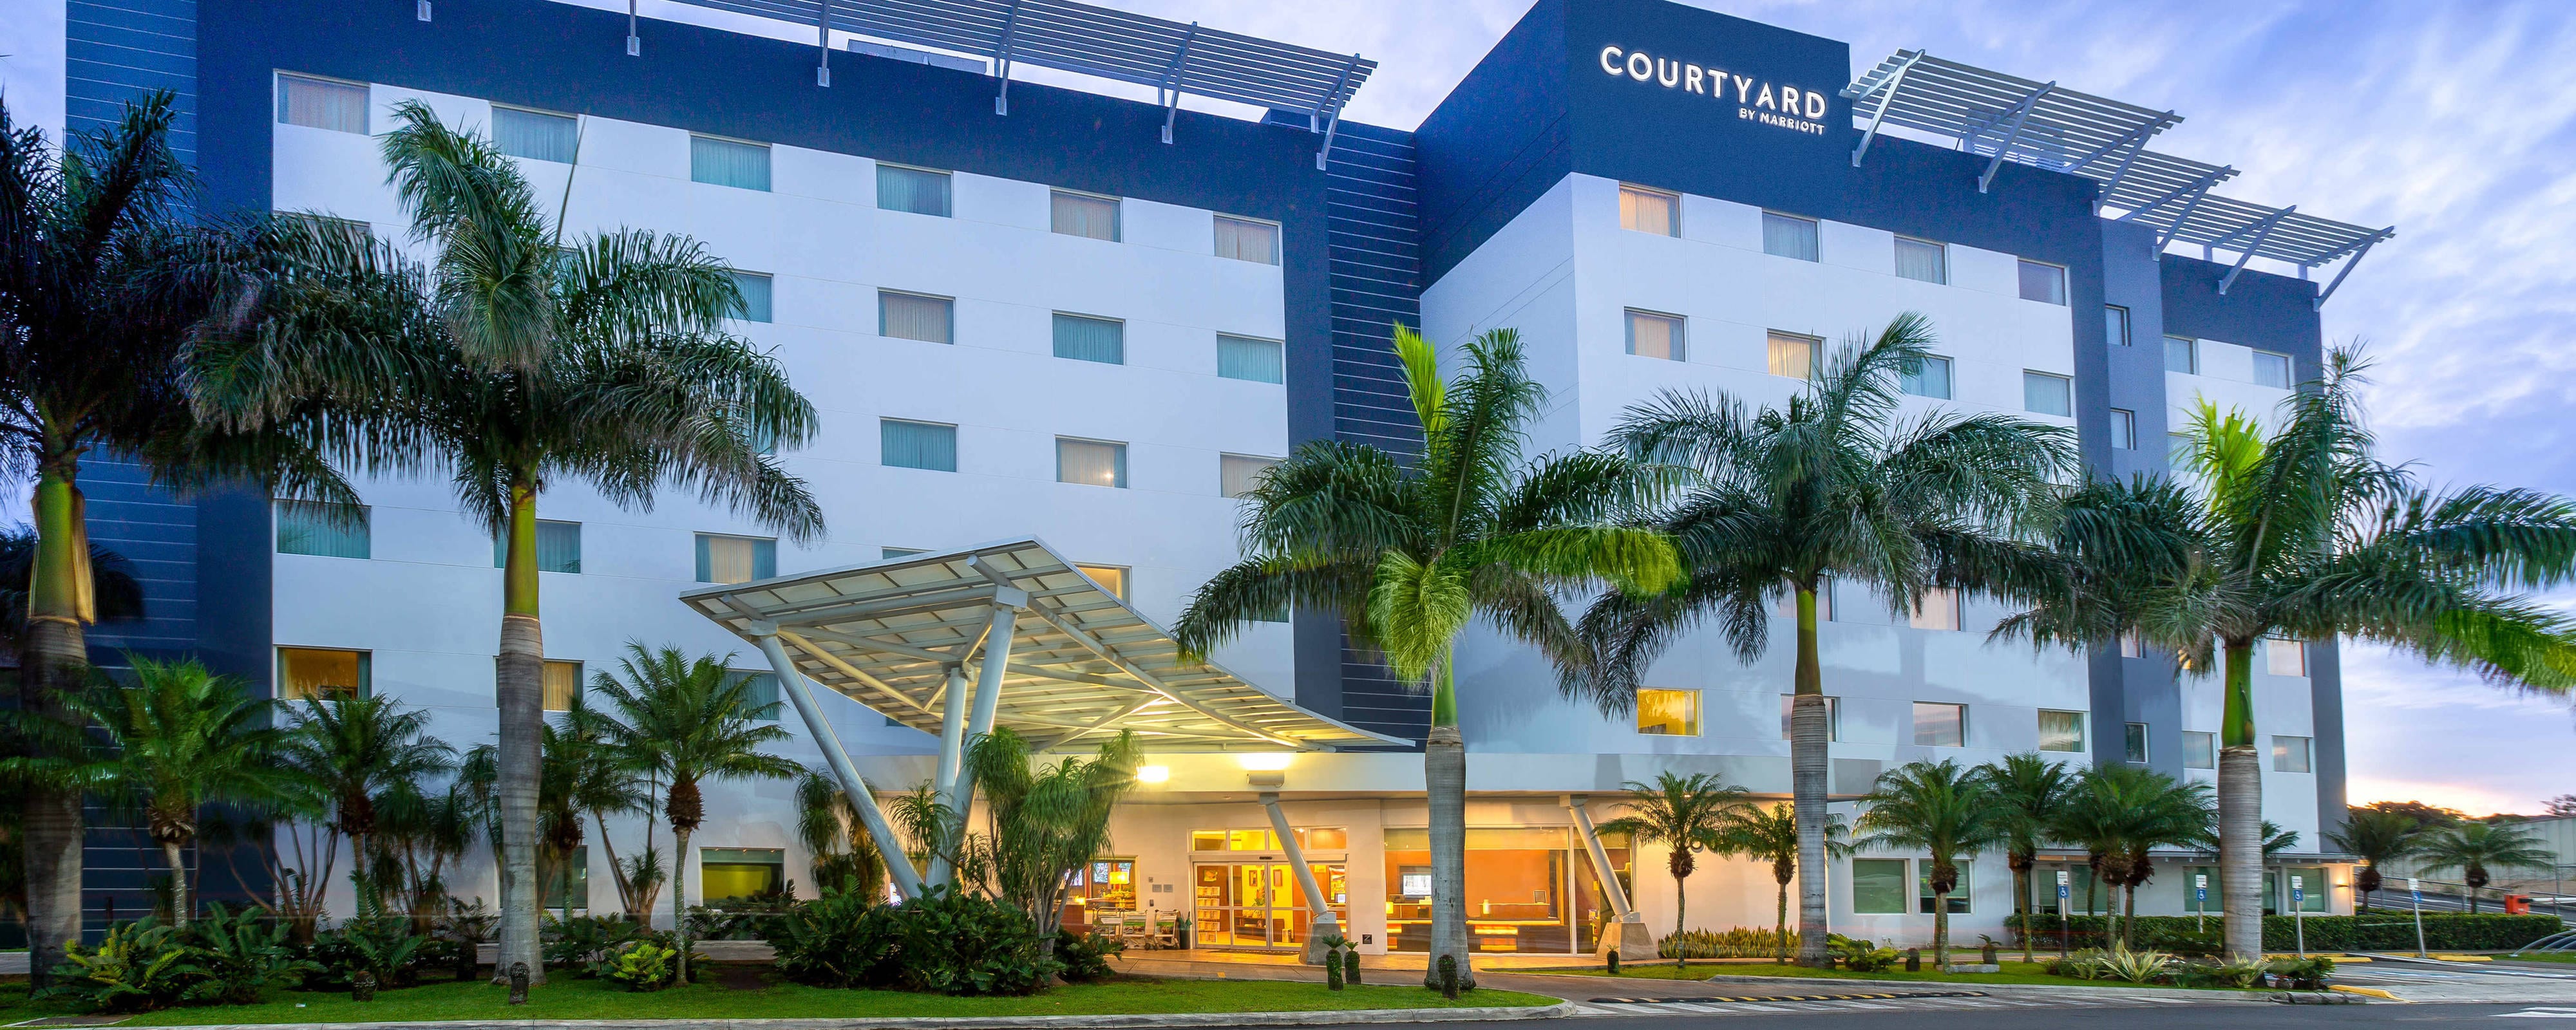 Hotel near San Jose Airport, Costa Rica | Courtyard San Jose Airport